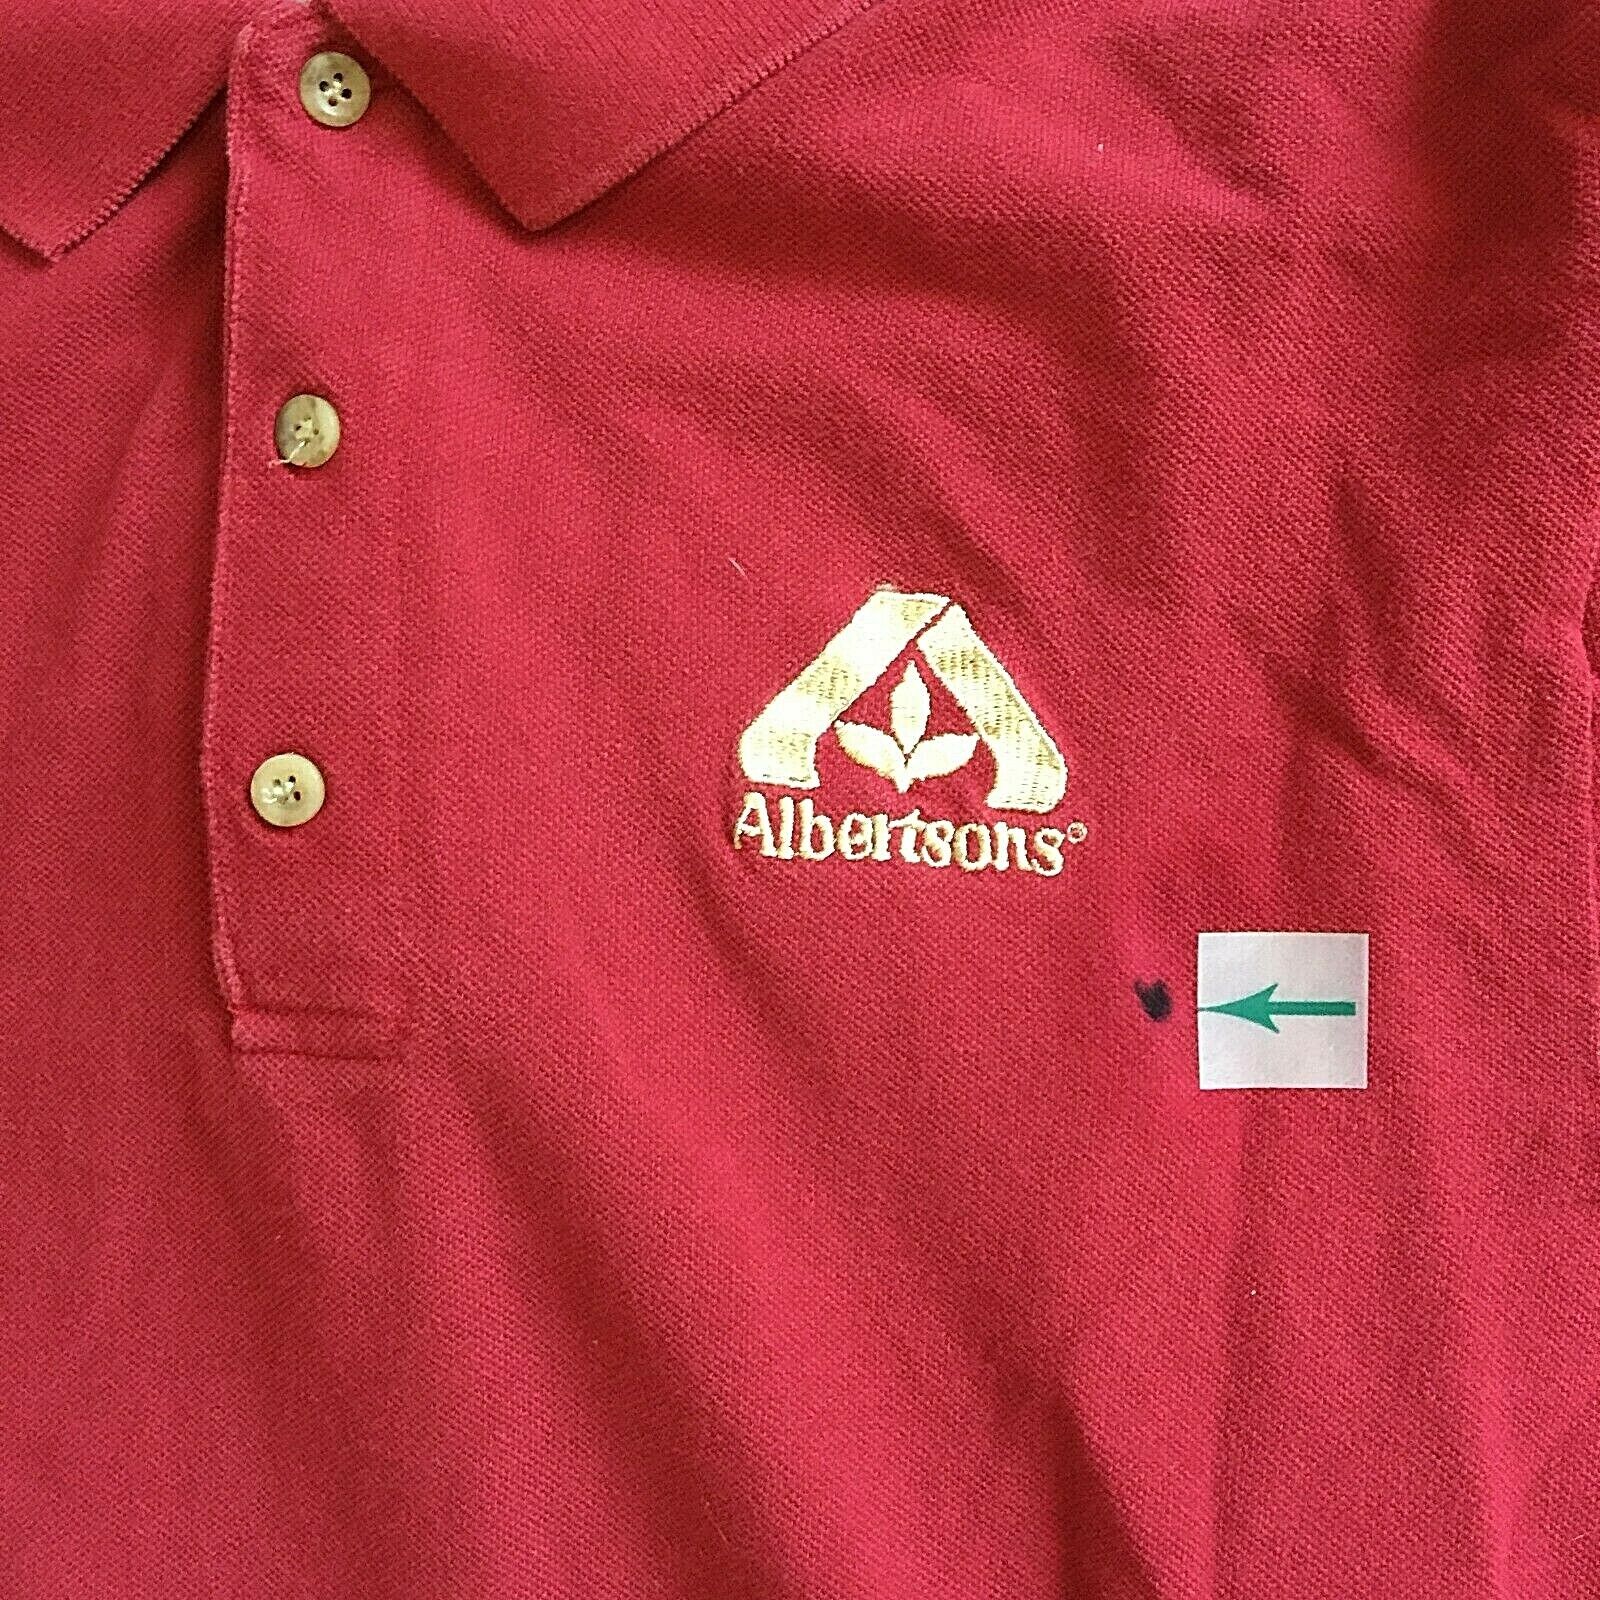 Vintage Albertsons Food Pyramid Grocery Employee Uniform Polo Shirts and Apron Gildan - фотография #4